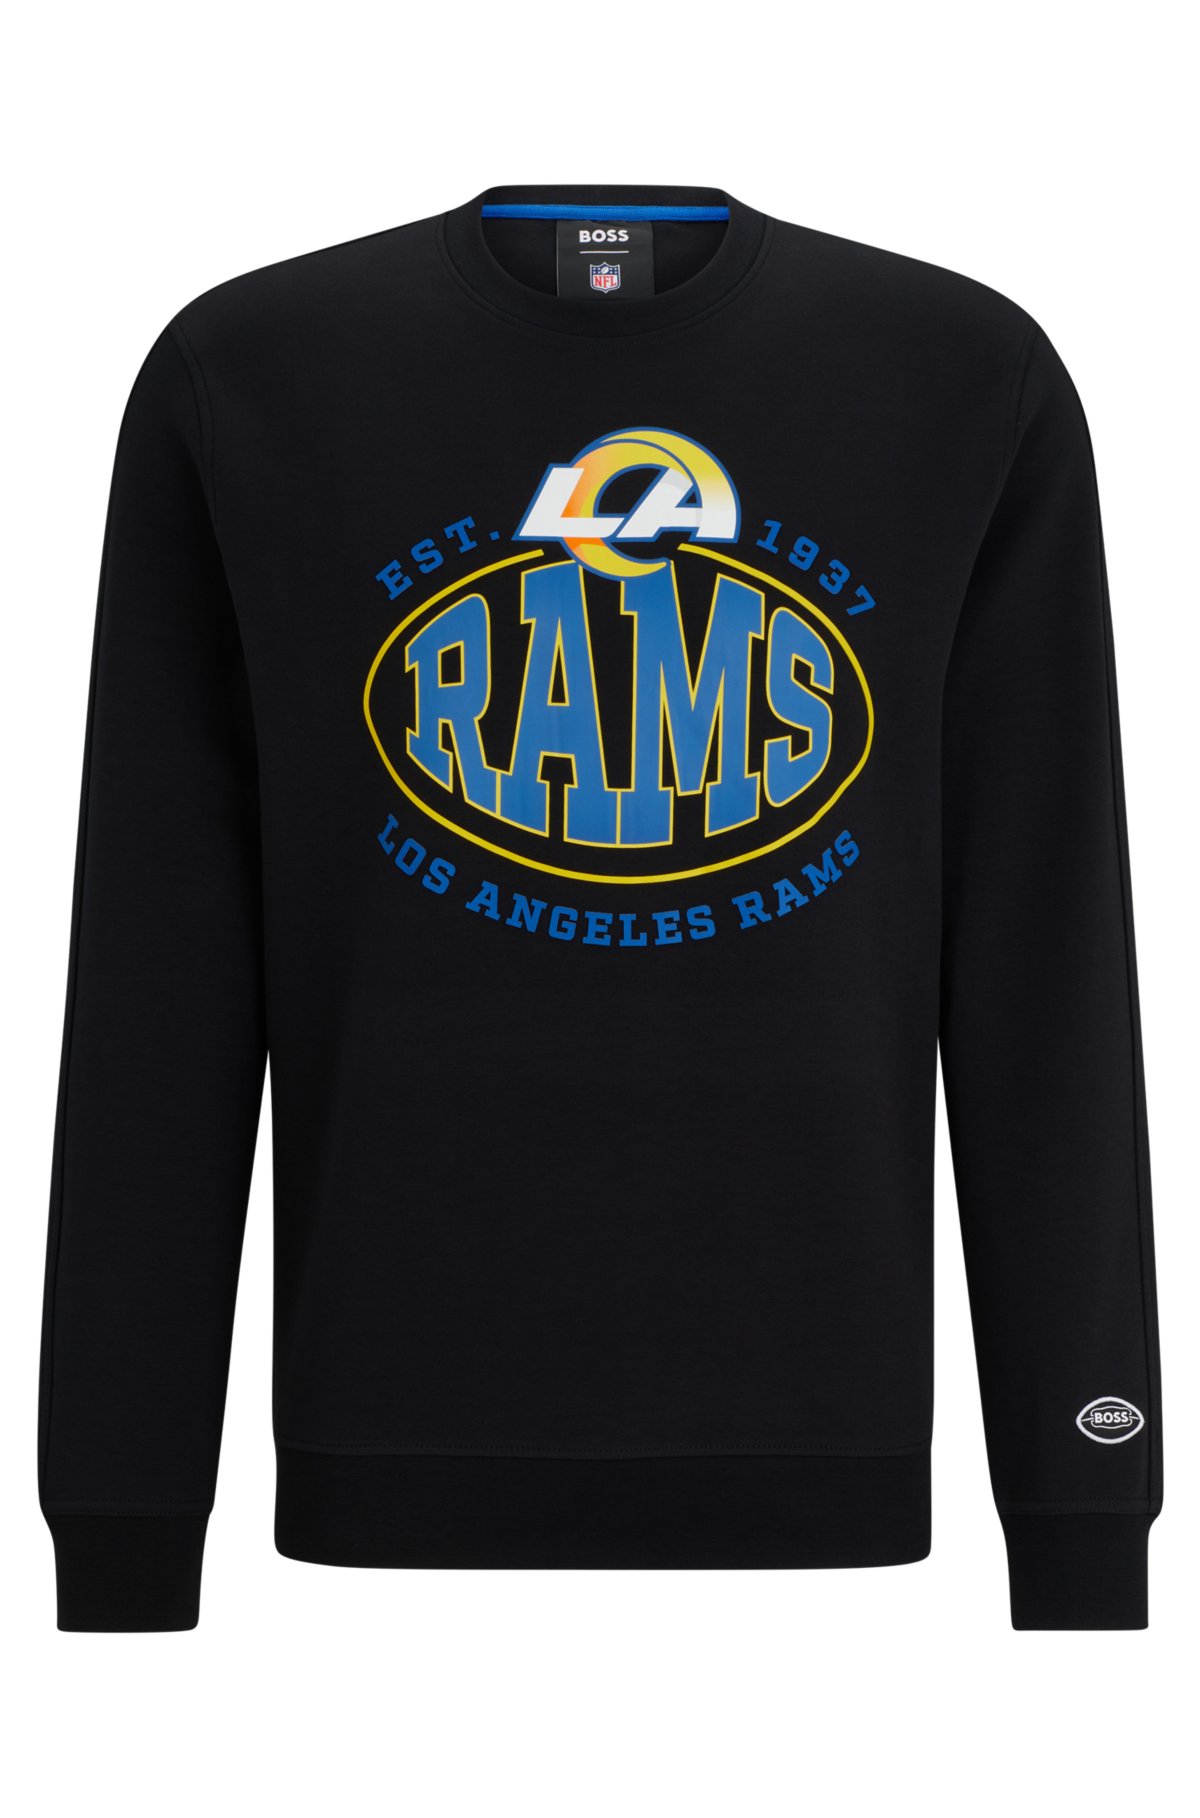 BOSS x NFL cotton-blend sweatshirt with collaborative branding, Rams